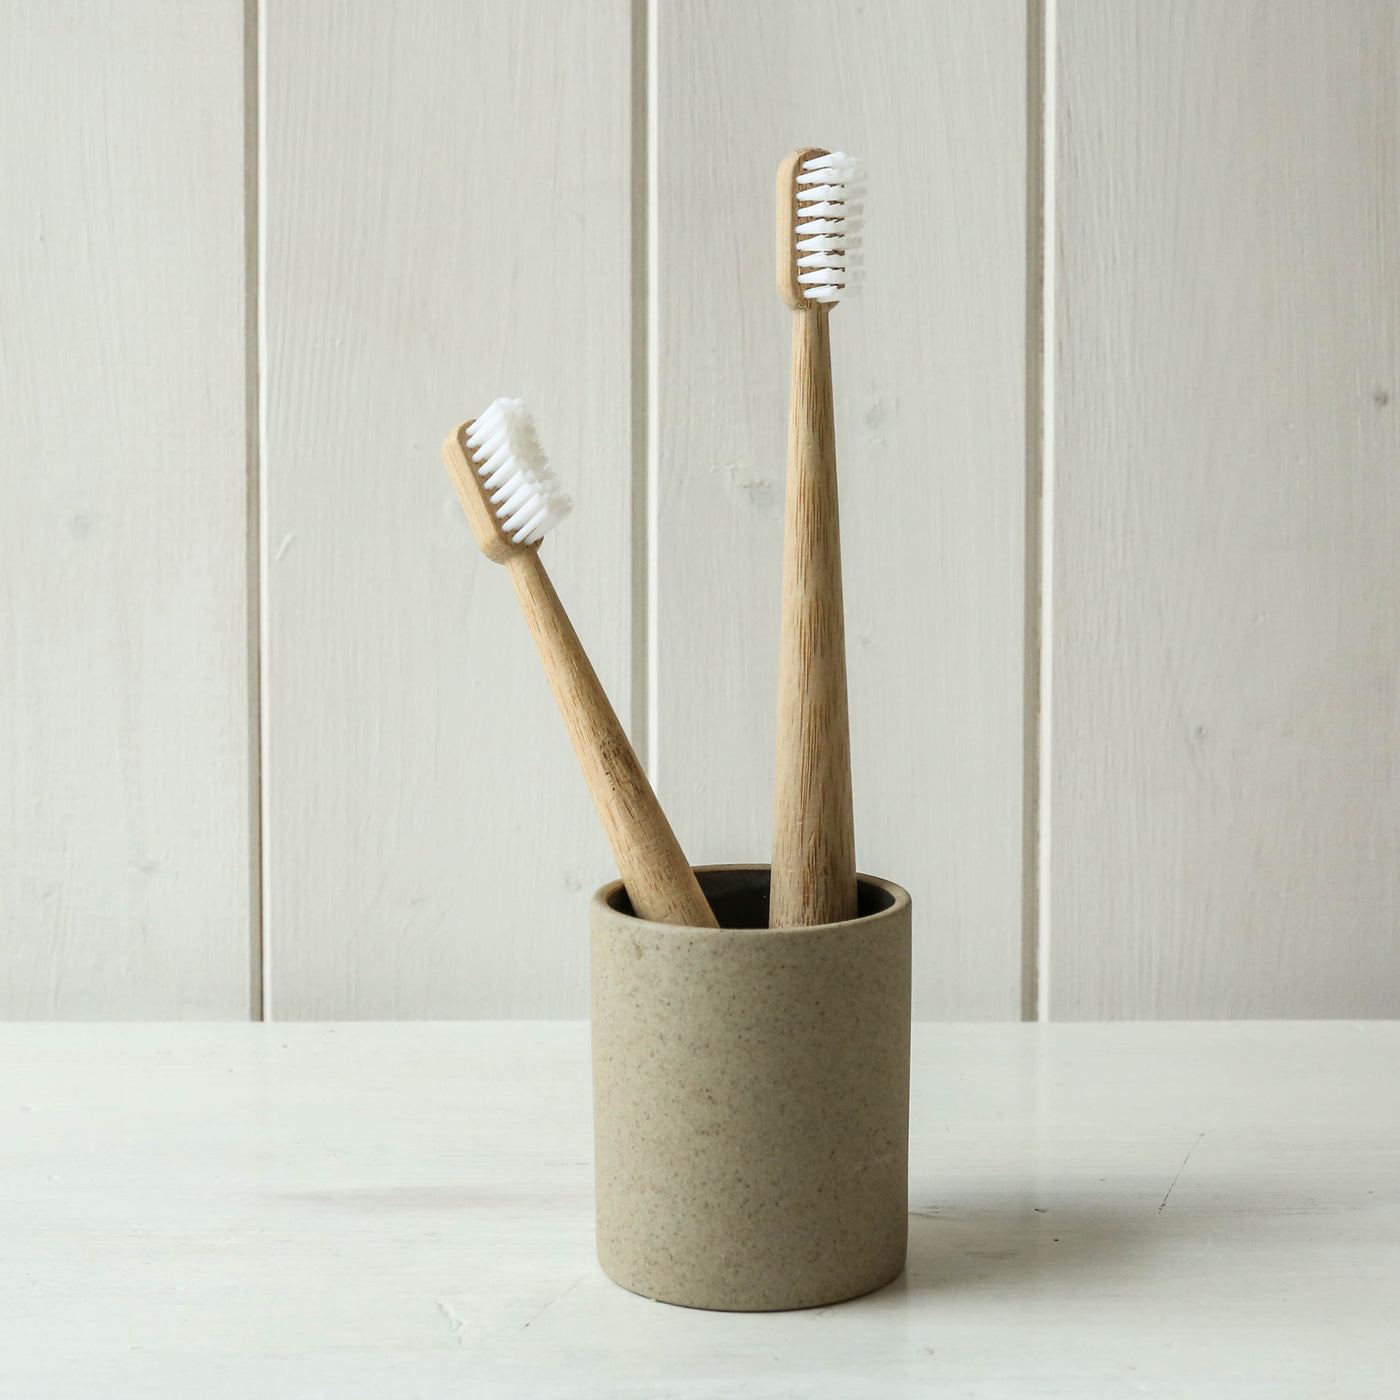 Moso Bamboo Toothbrush